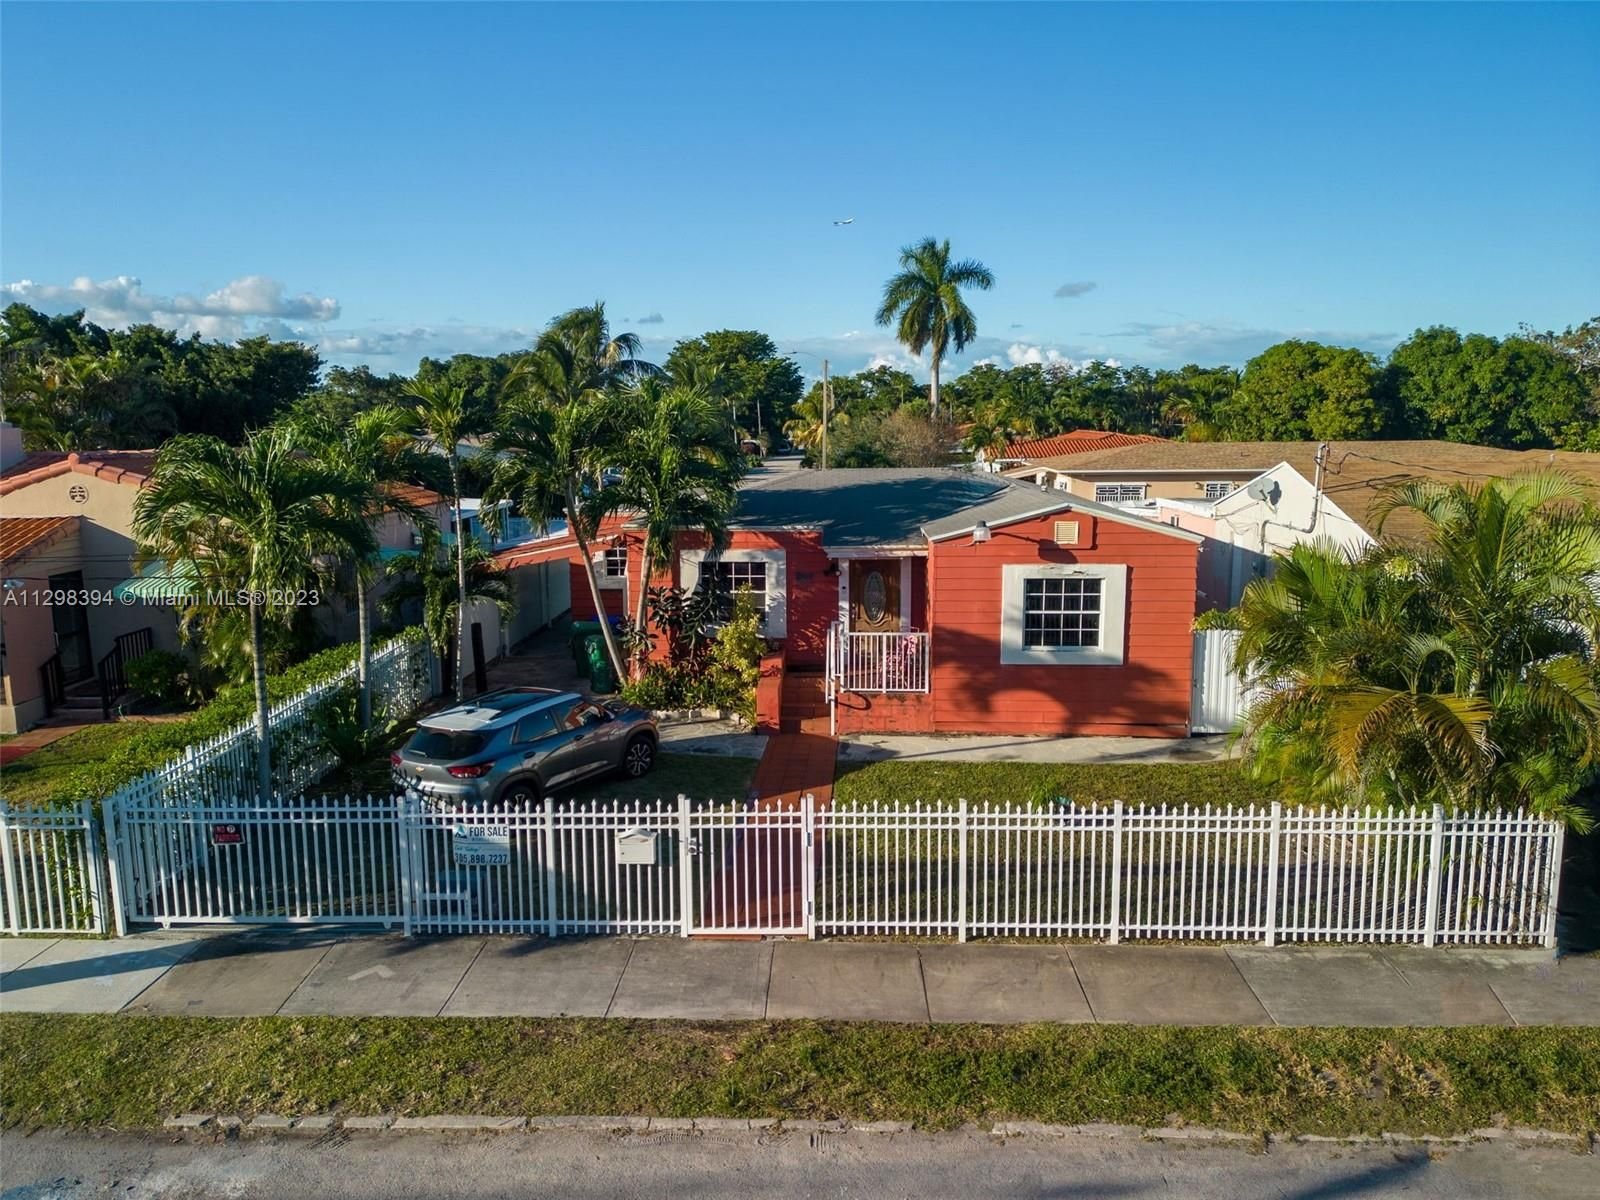 Real estate property located at 3047 4th St, Miami-Dade County, Miami, FL